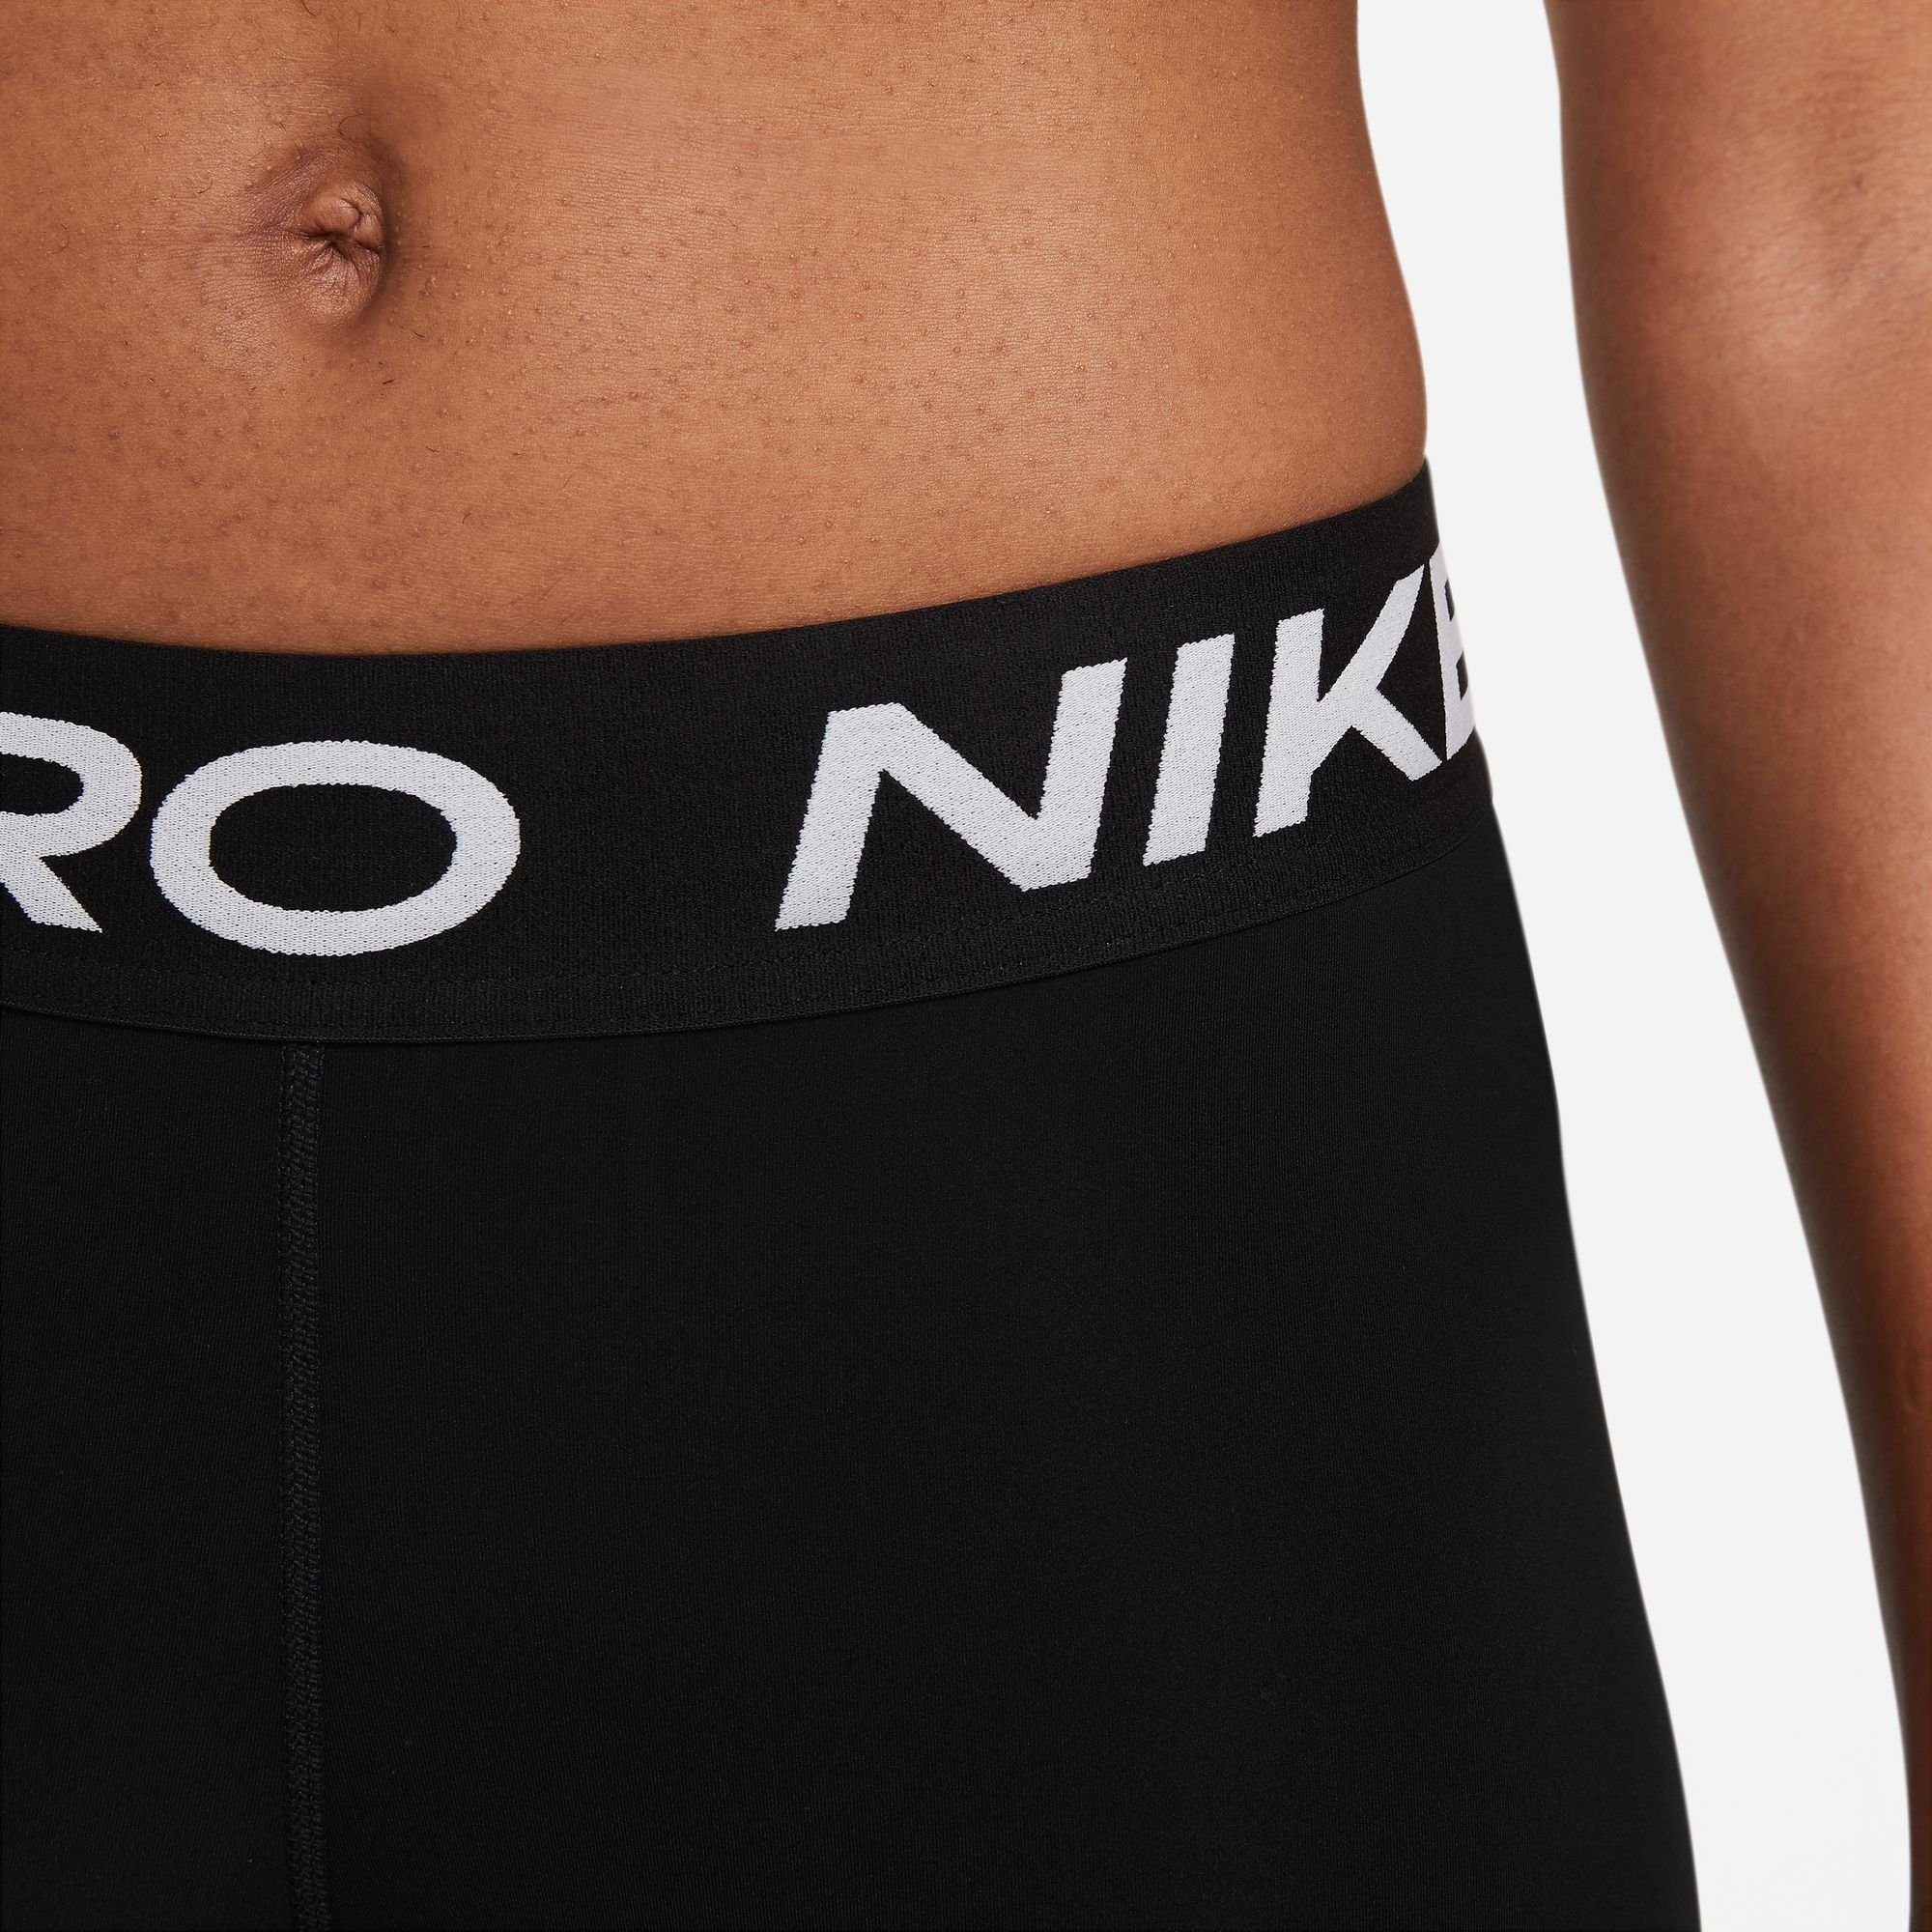 MESH-PANELED schwarz LEGGINGS PRO Trainingstights WOMEN'S Nike MID-RISE